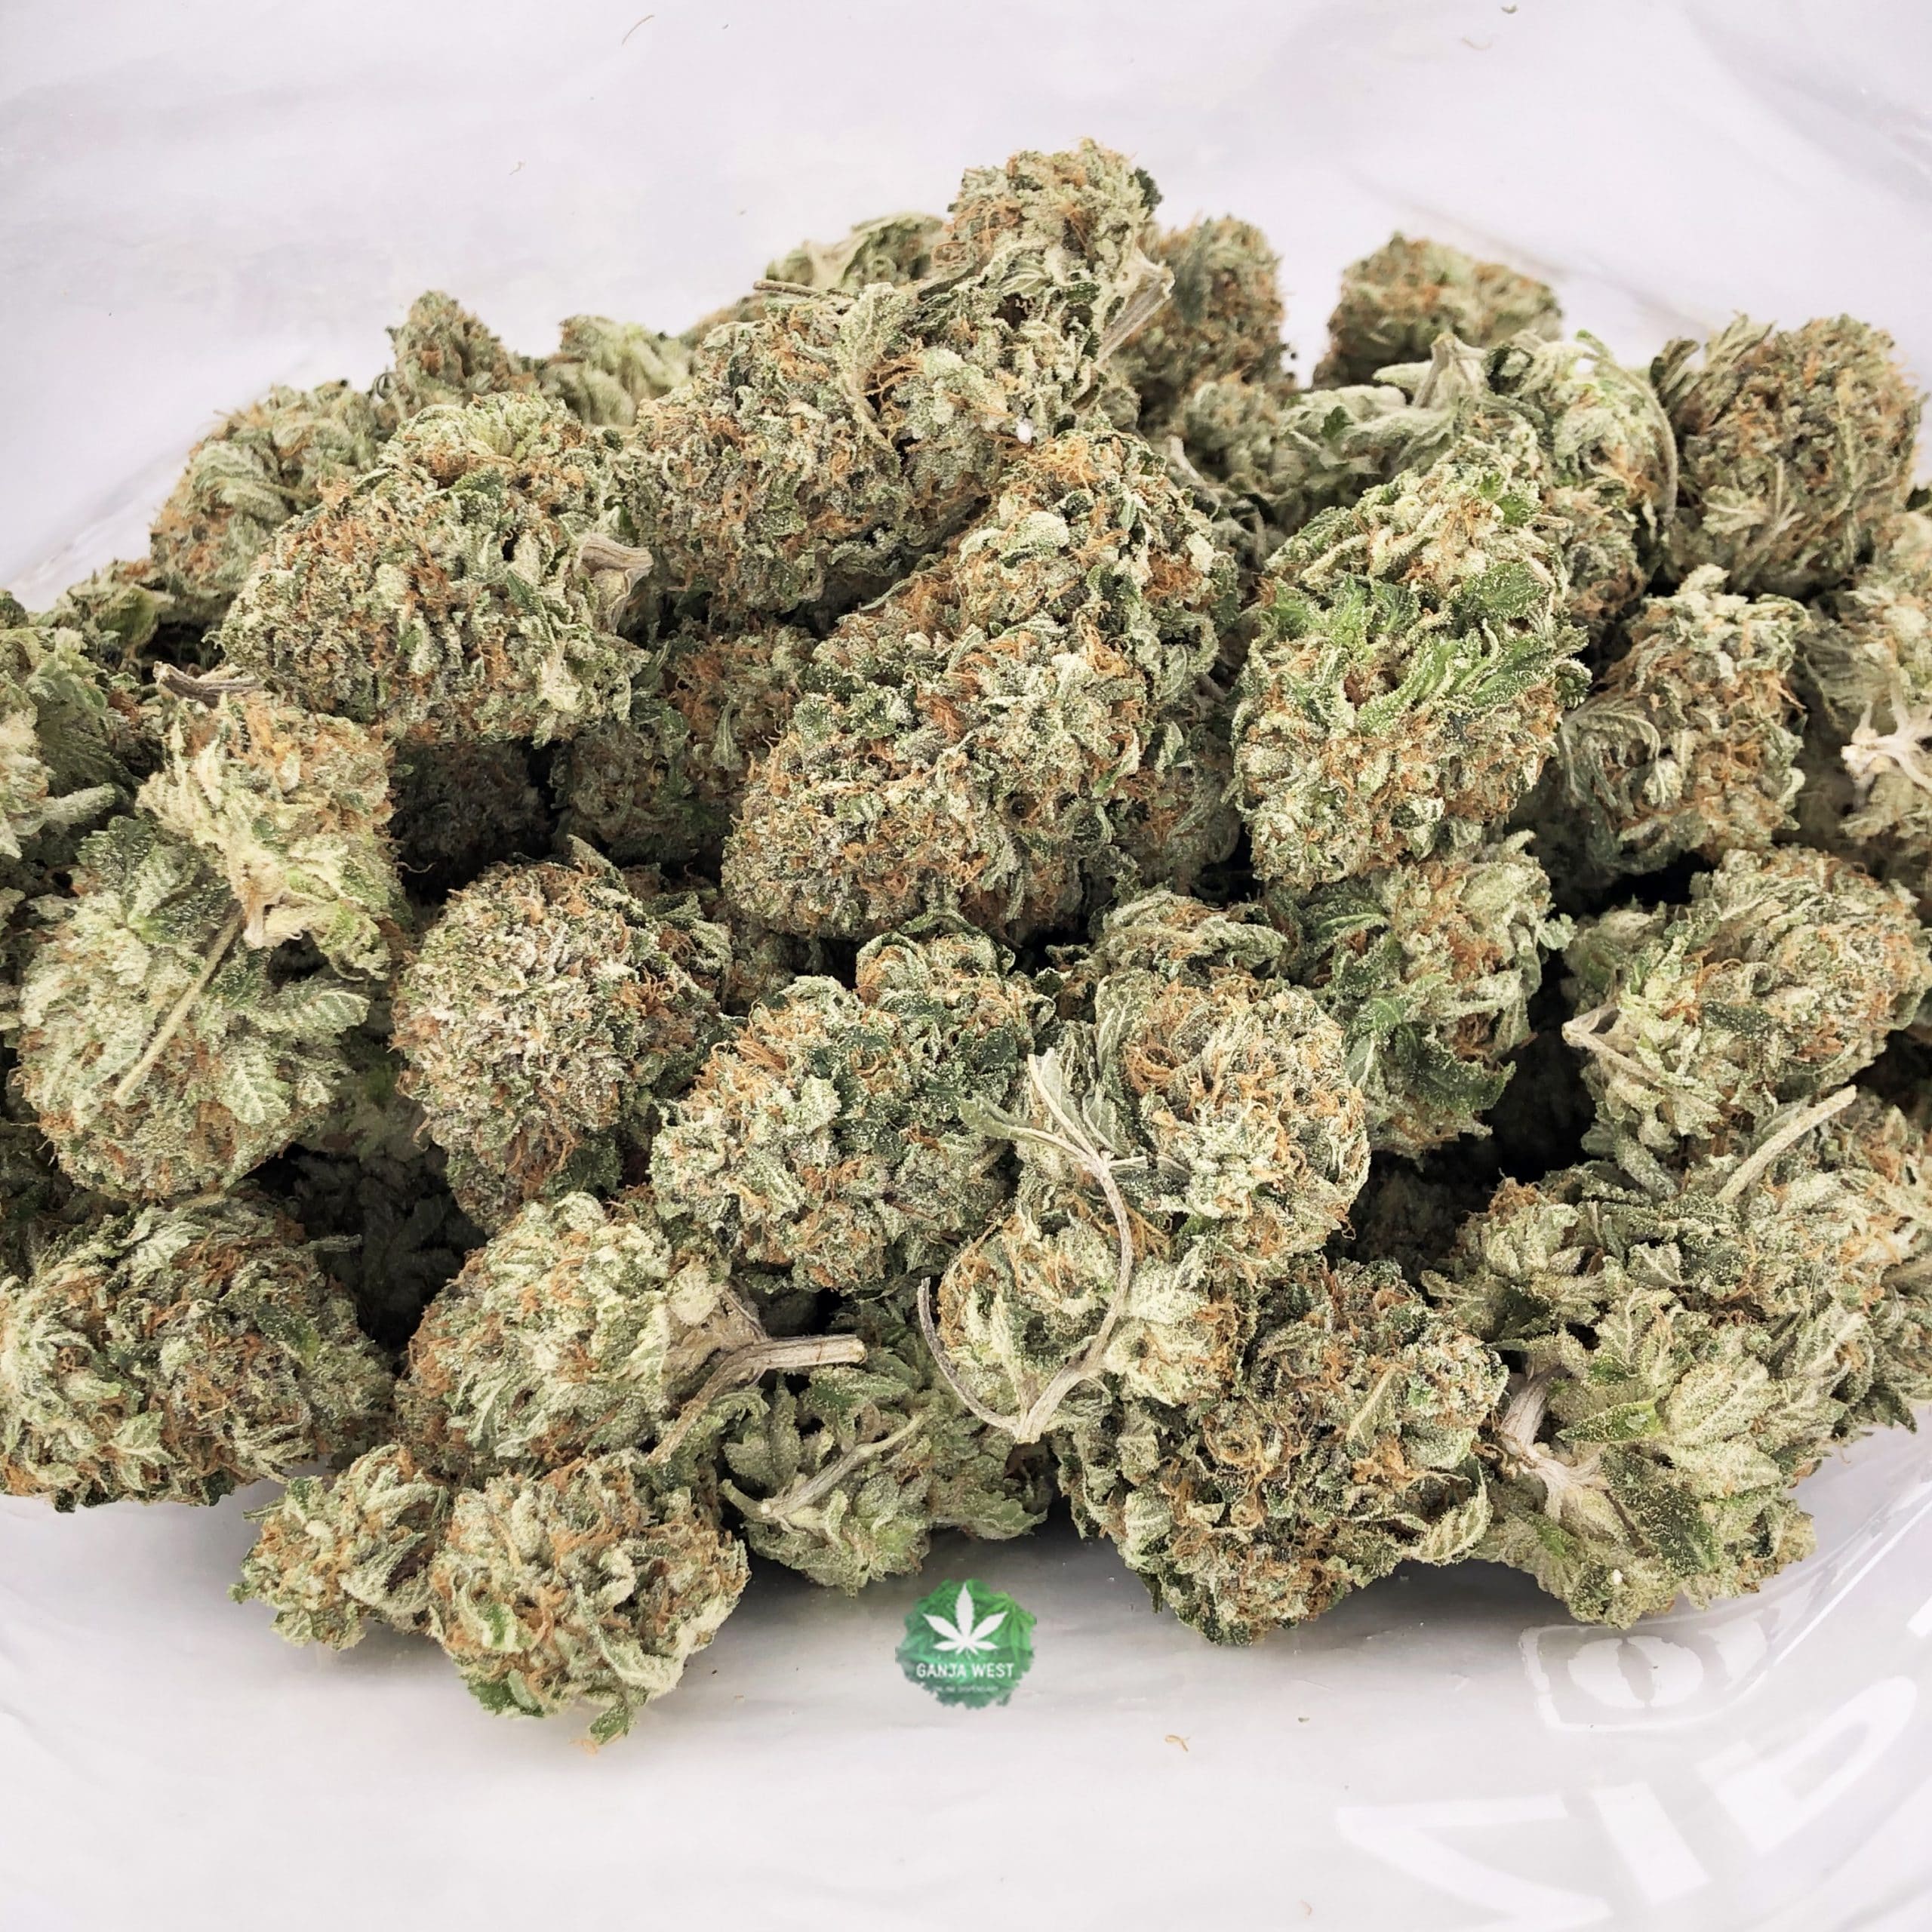 buy-strain-cannabis-online-dispensary-ganja-west-aaaa-rocket-fuel-wholesale-scaled-2.jpg